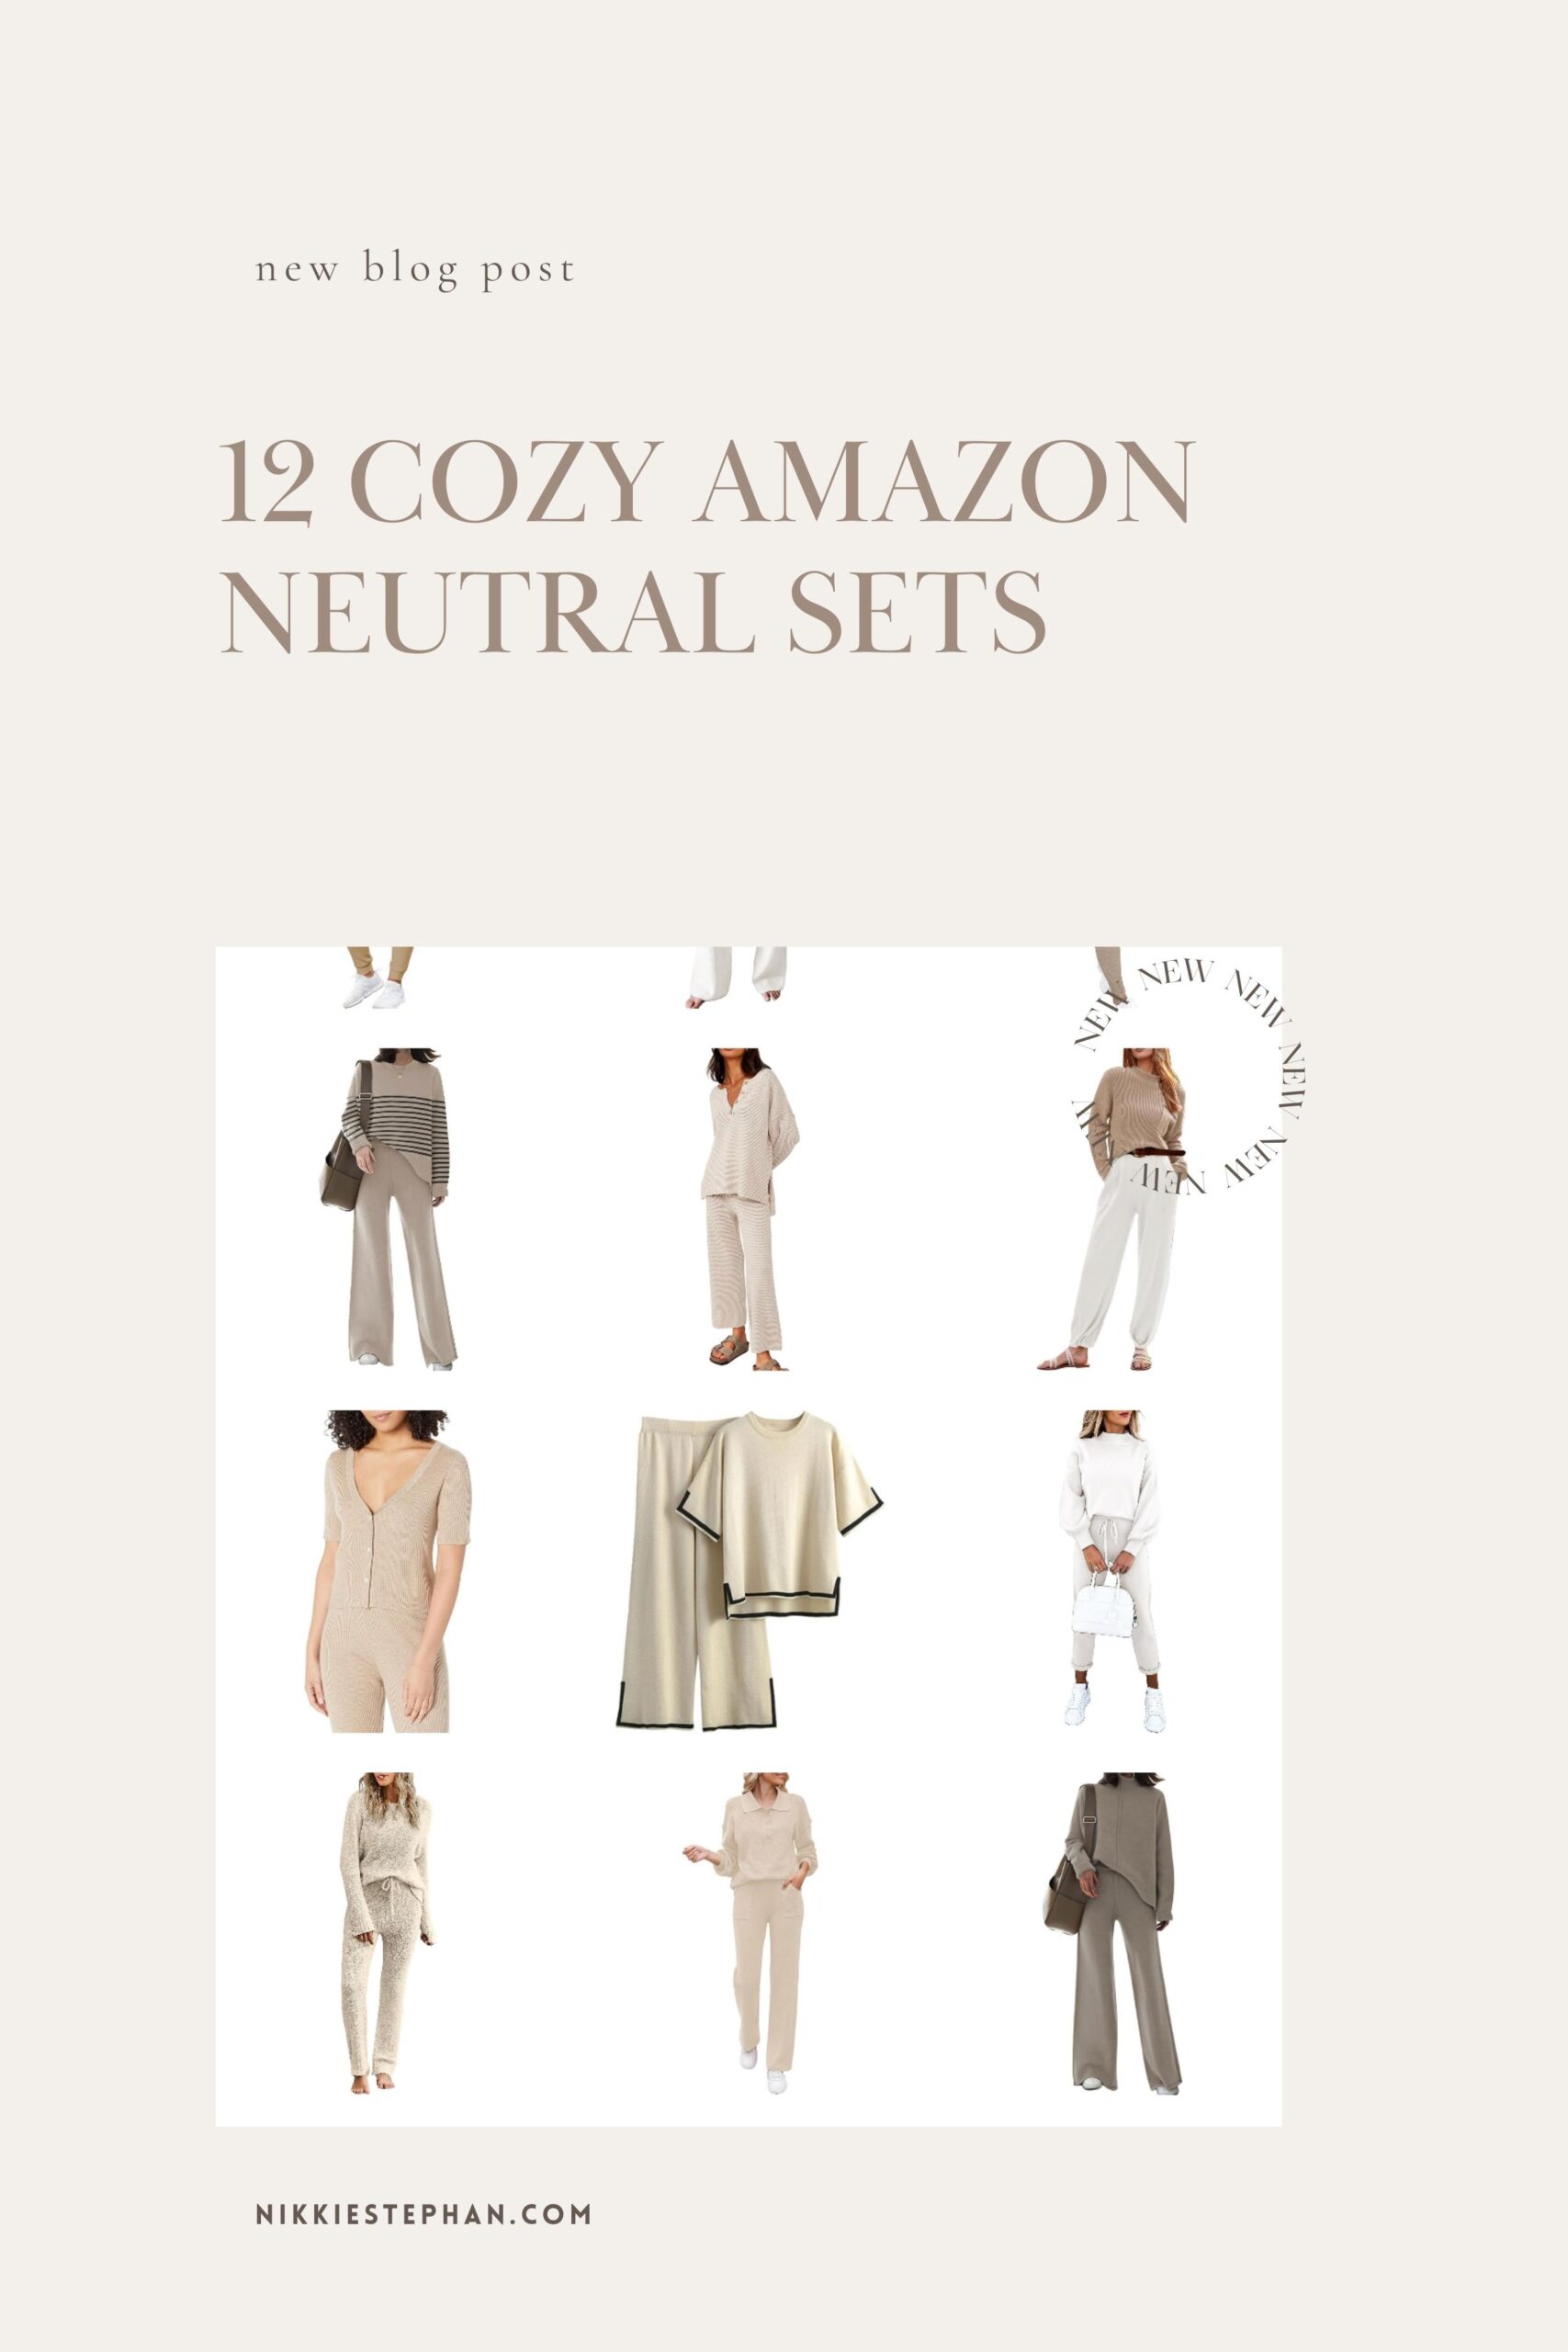 12 Cozy Amazon NEUTRAL Sets